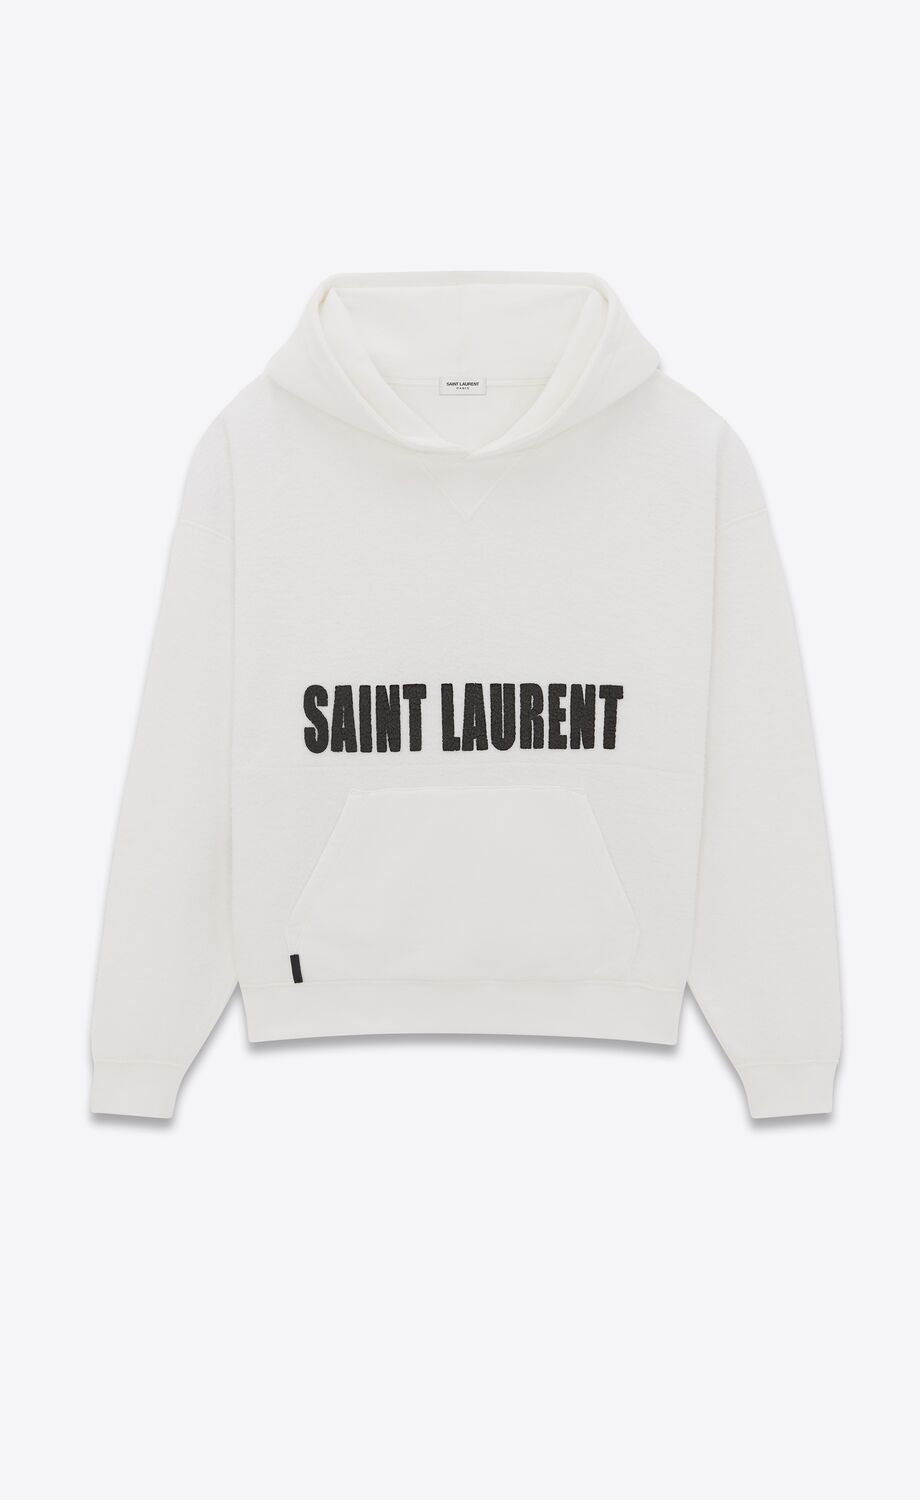 SAINT LAURENT AGAFAY HOODIE | Saint Laurent | YSL.com